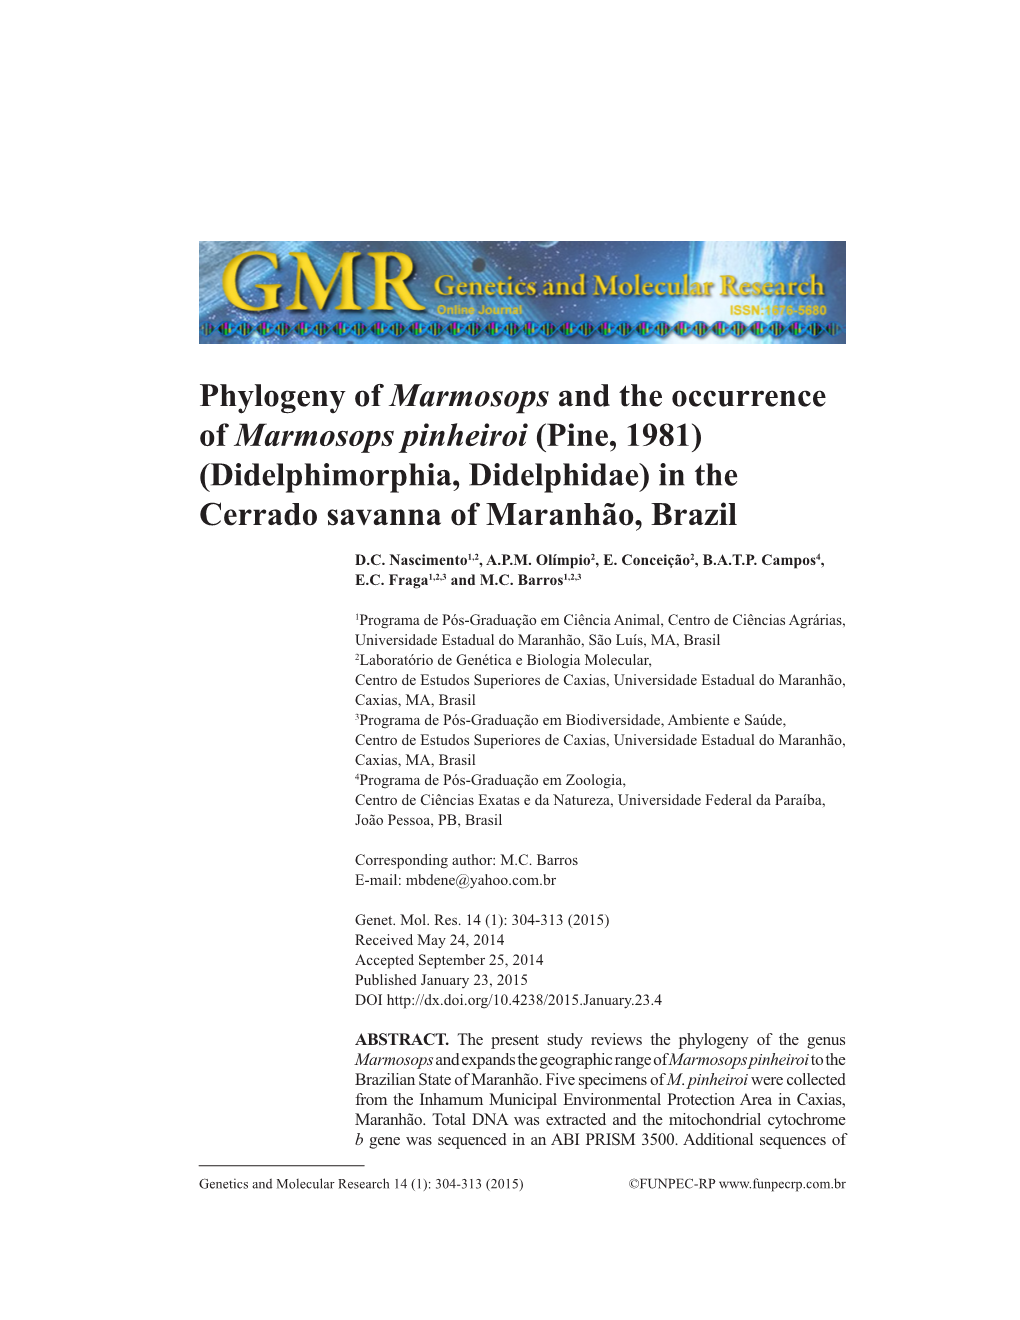 Phylogeny of Marmosops and the Occurrence of Marmosops Pinheiroi (Pine, 1981) (Didelphimorphia, Didelphidae) in the Cerrado Savanna of Maranhão, Brazil